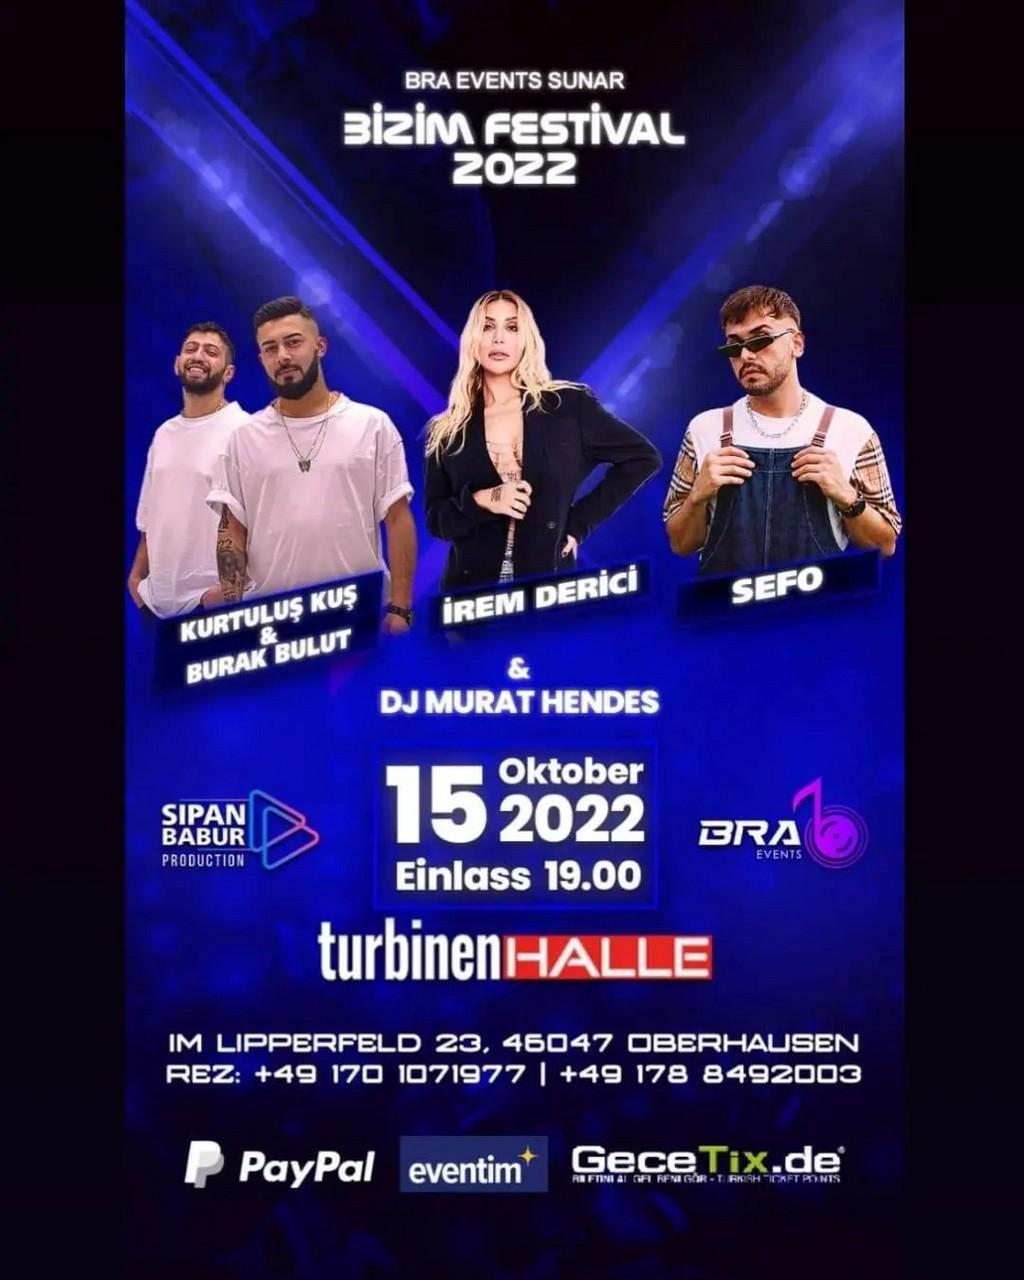 Lineup Poster Bizim Festival 2022